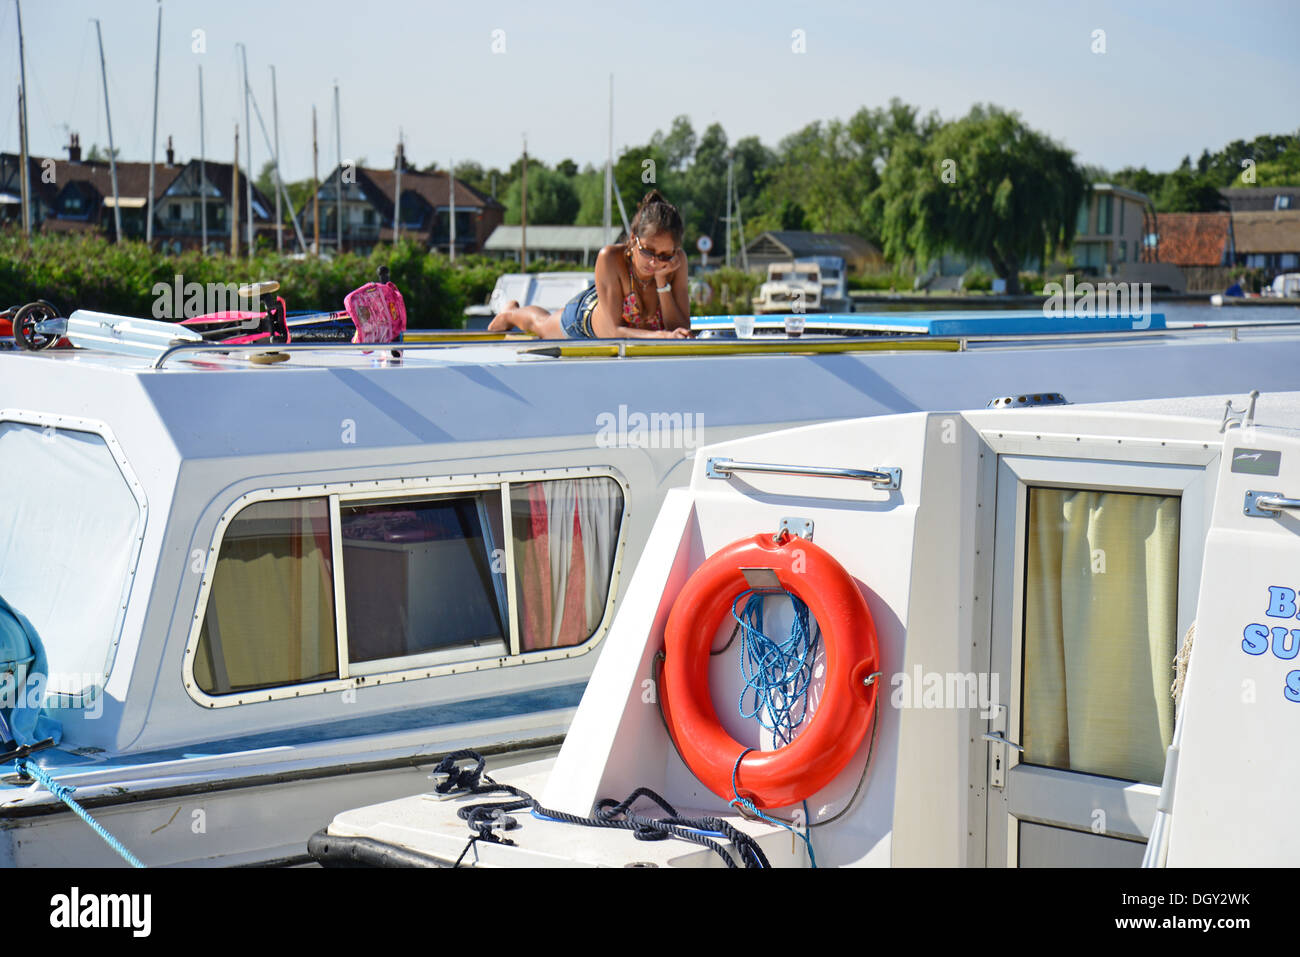 Boats on River Bure, Horning, Norfolk Broads, Norfolk, England, United Kingdom Stock Photo